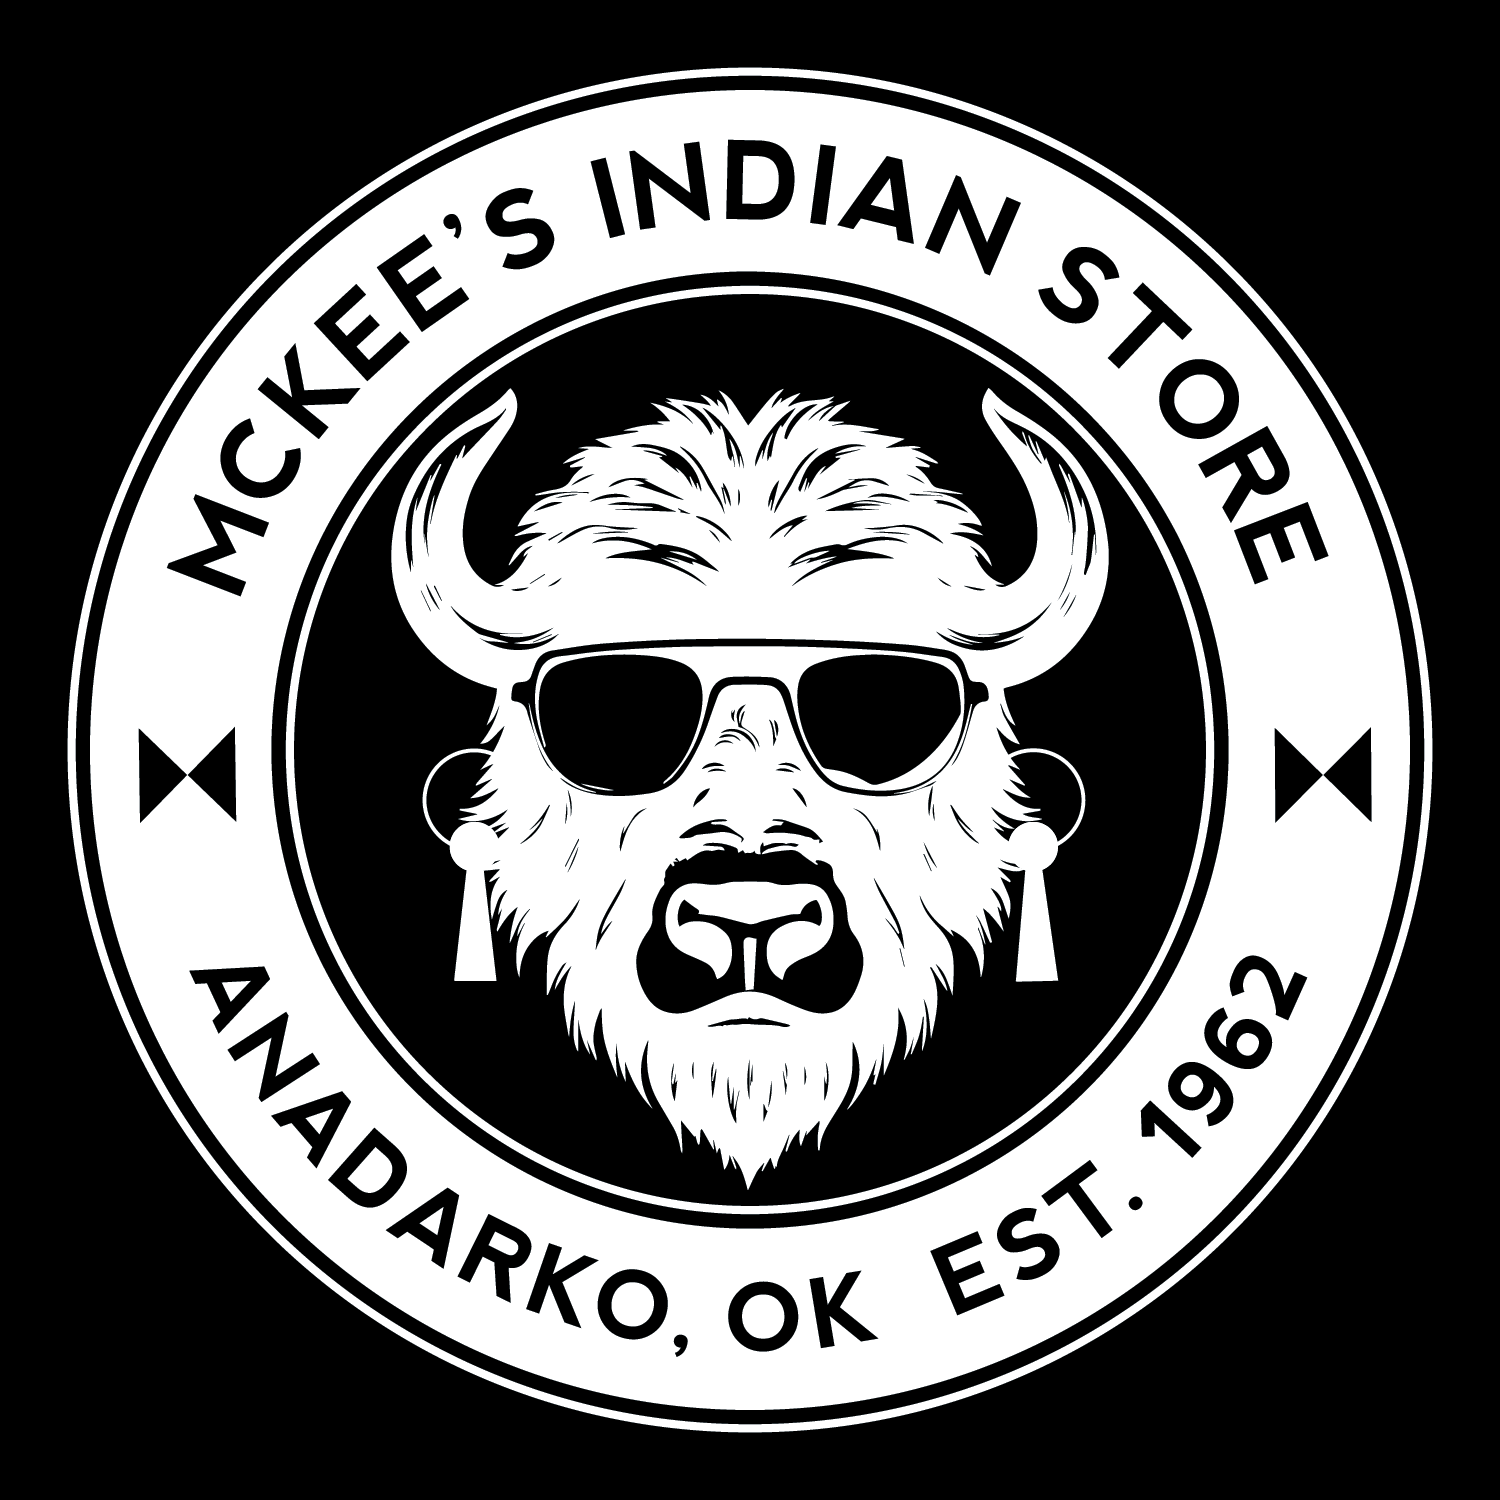 McKee's Indian Store